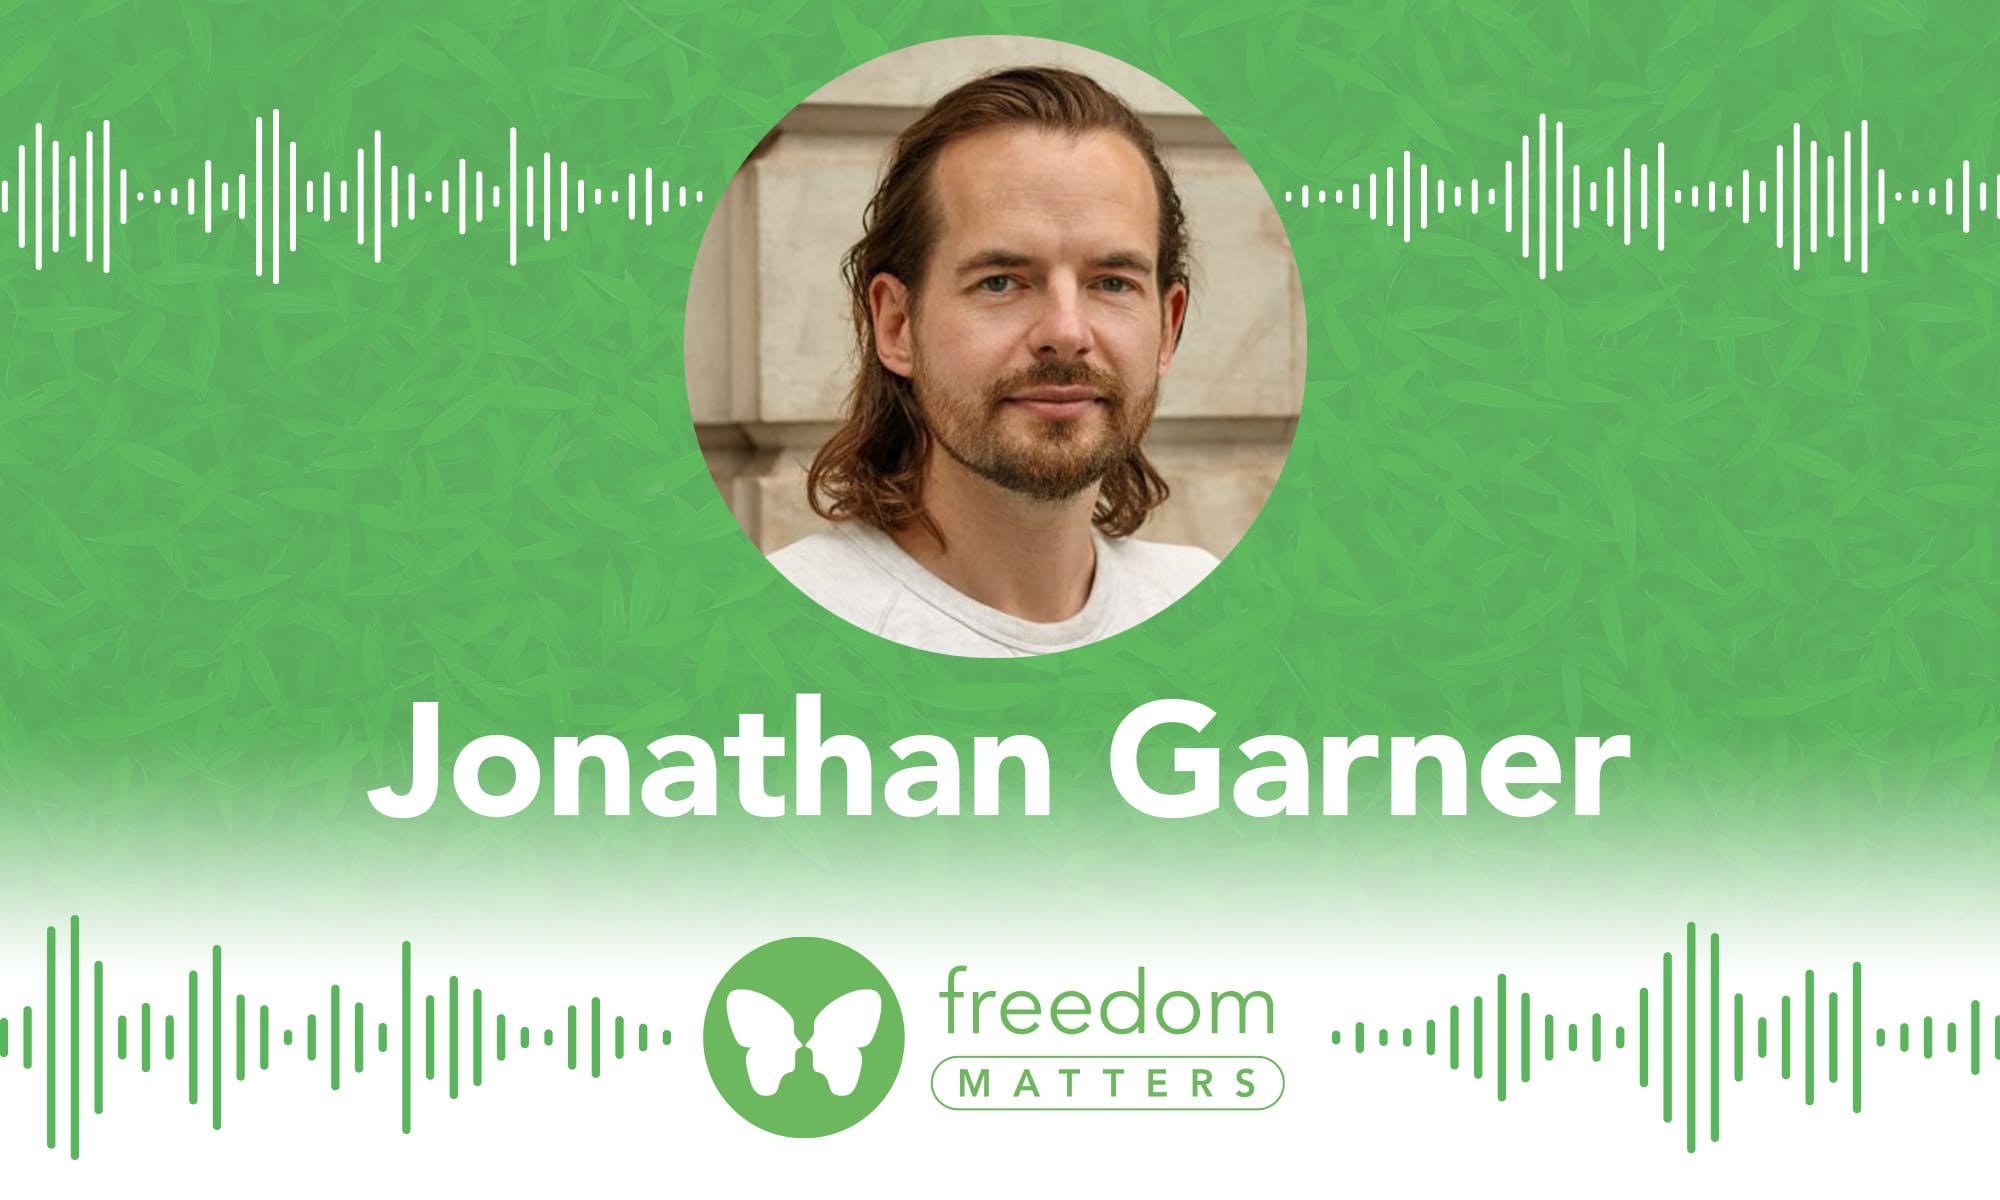 Freedom Matters Jonathan Garner